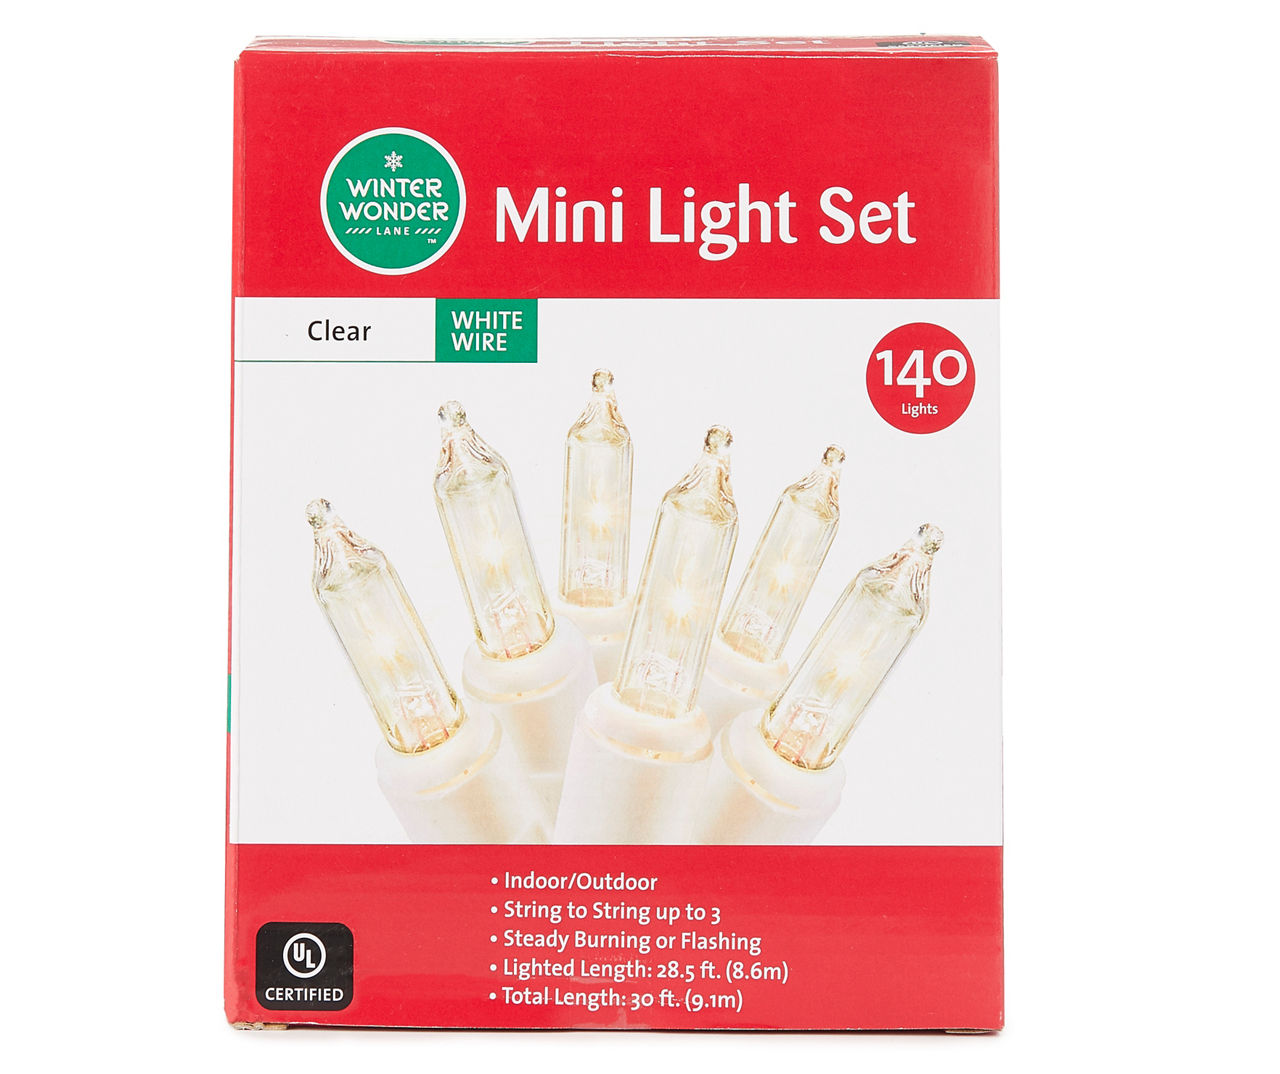 Winter Wonder Lane Mini Light Set with White Wire, 140-Lights